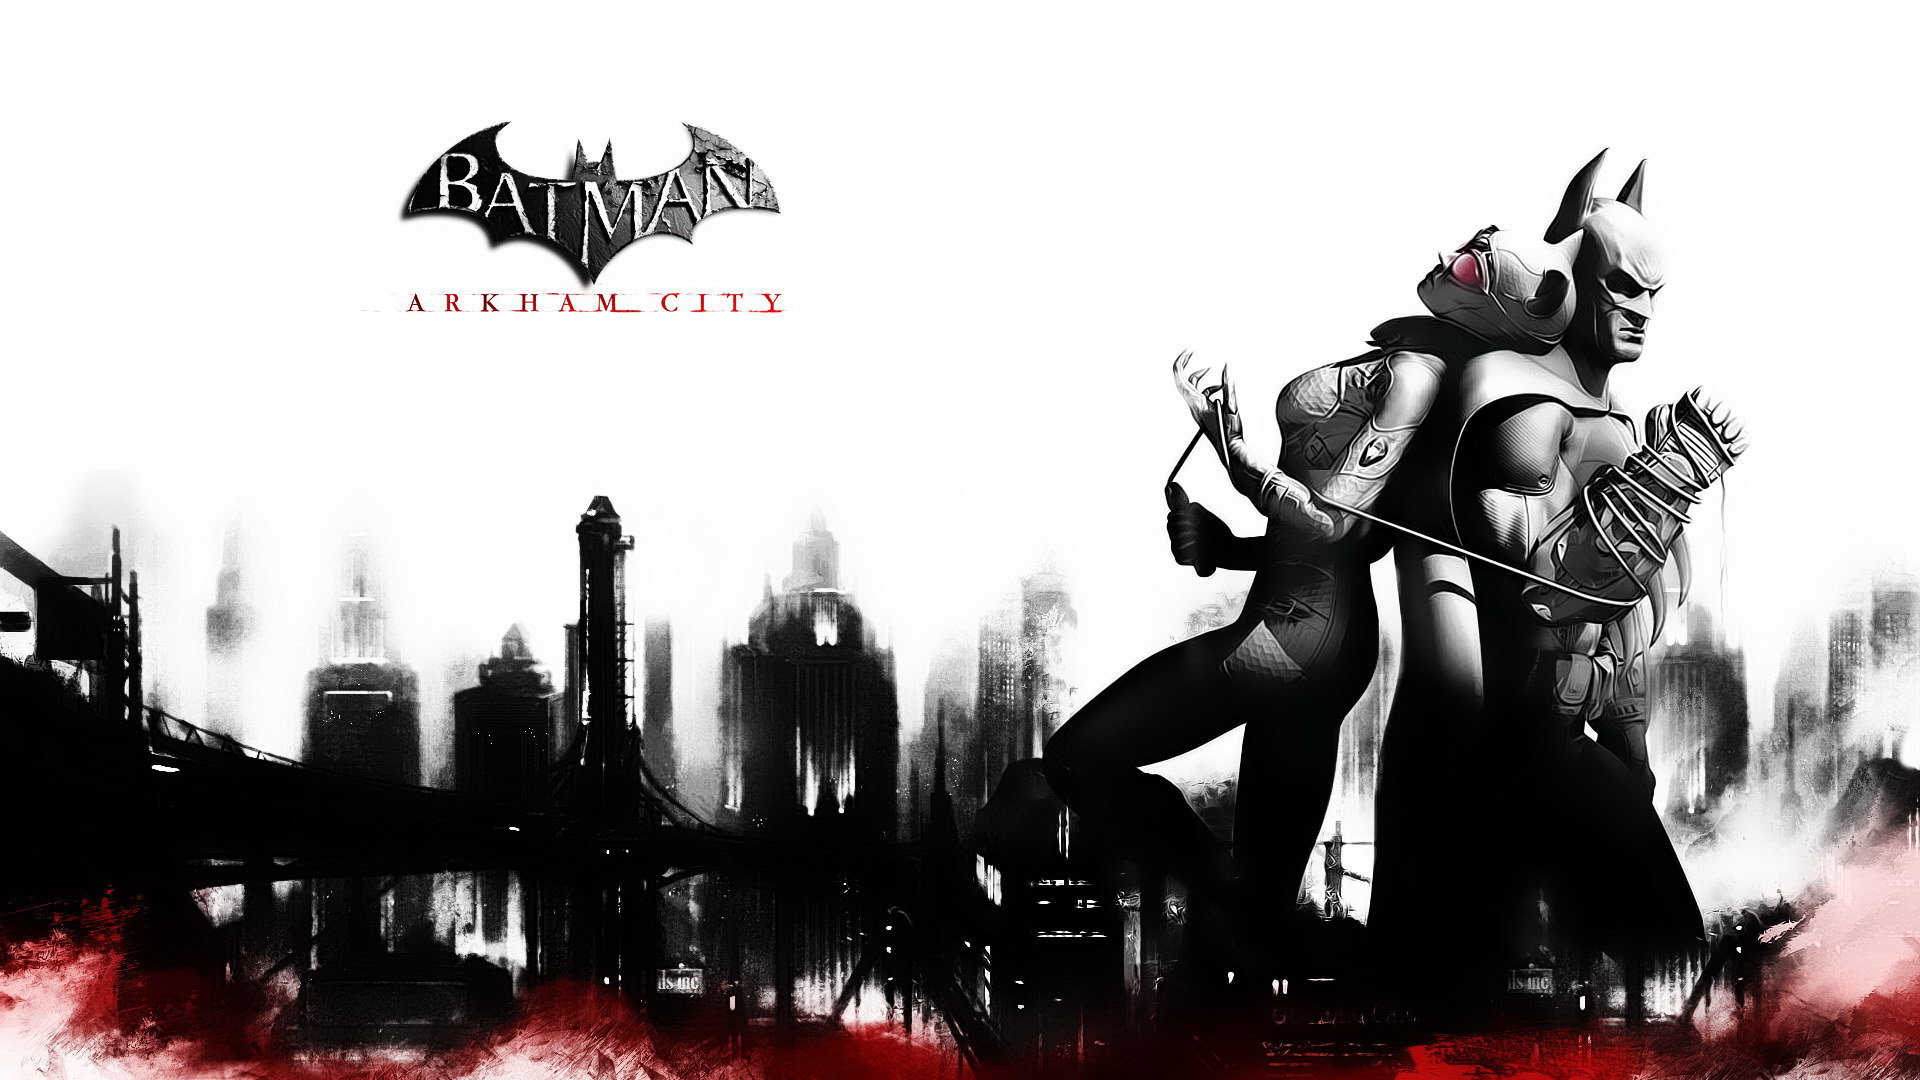 Download full hd 1920x1080 Batman: Arkham City desktop background ID:300084 for free